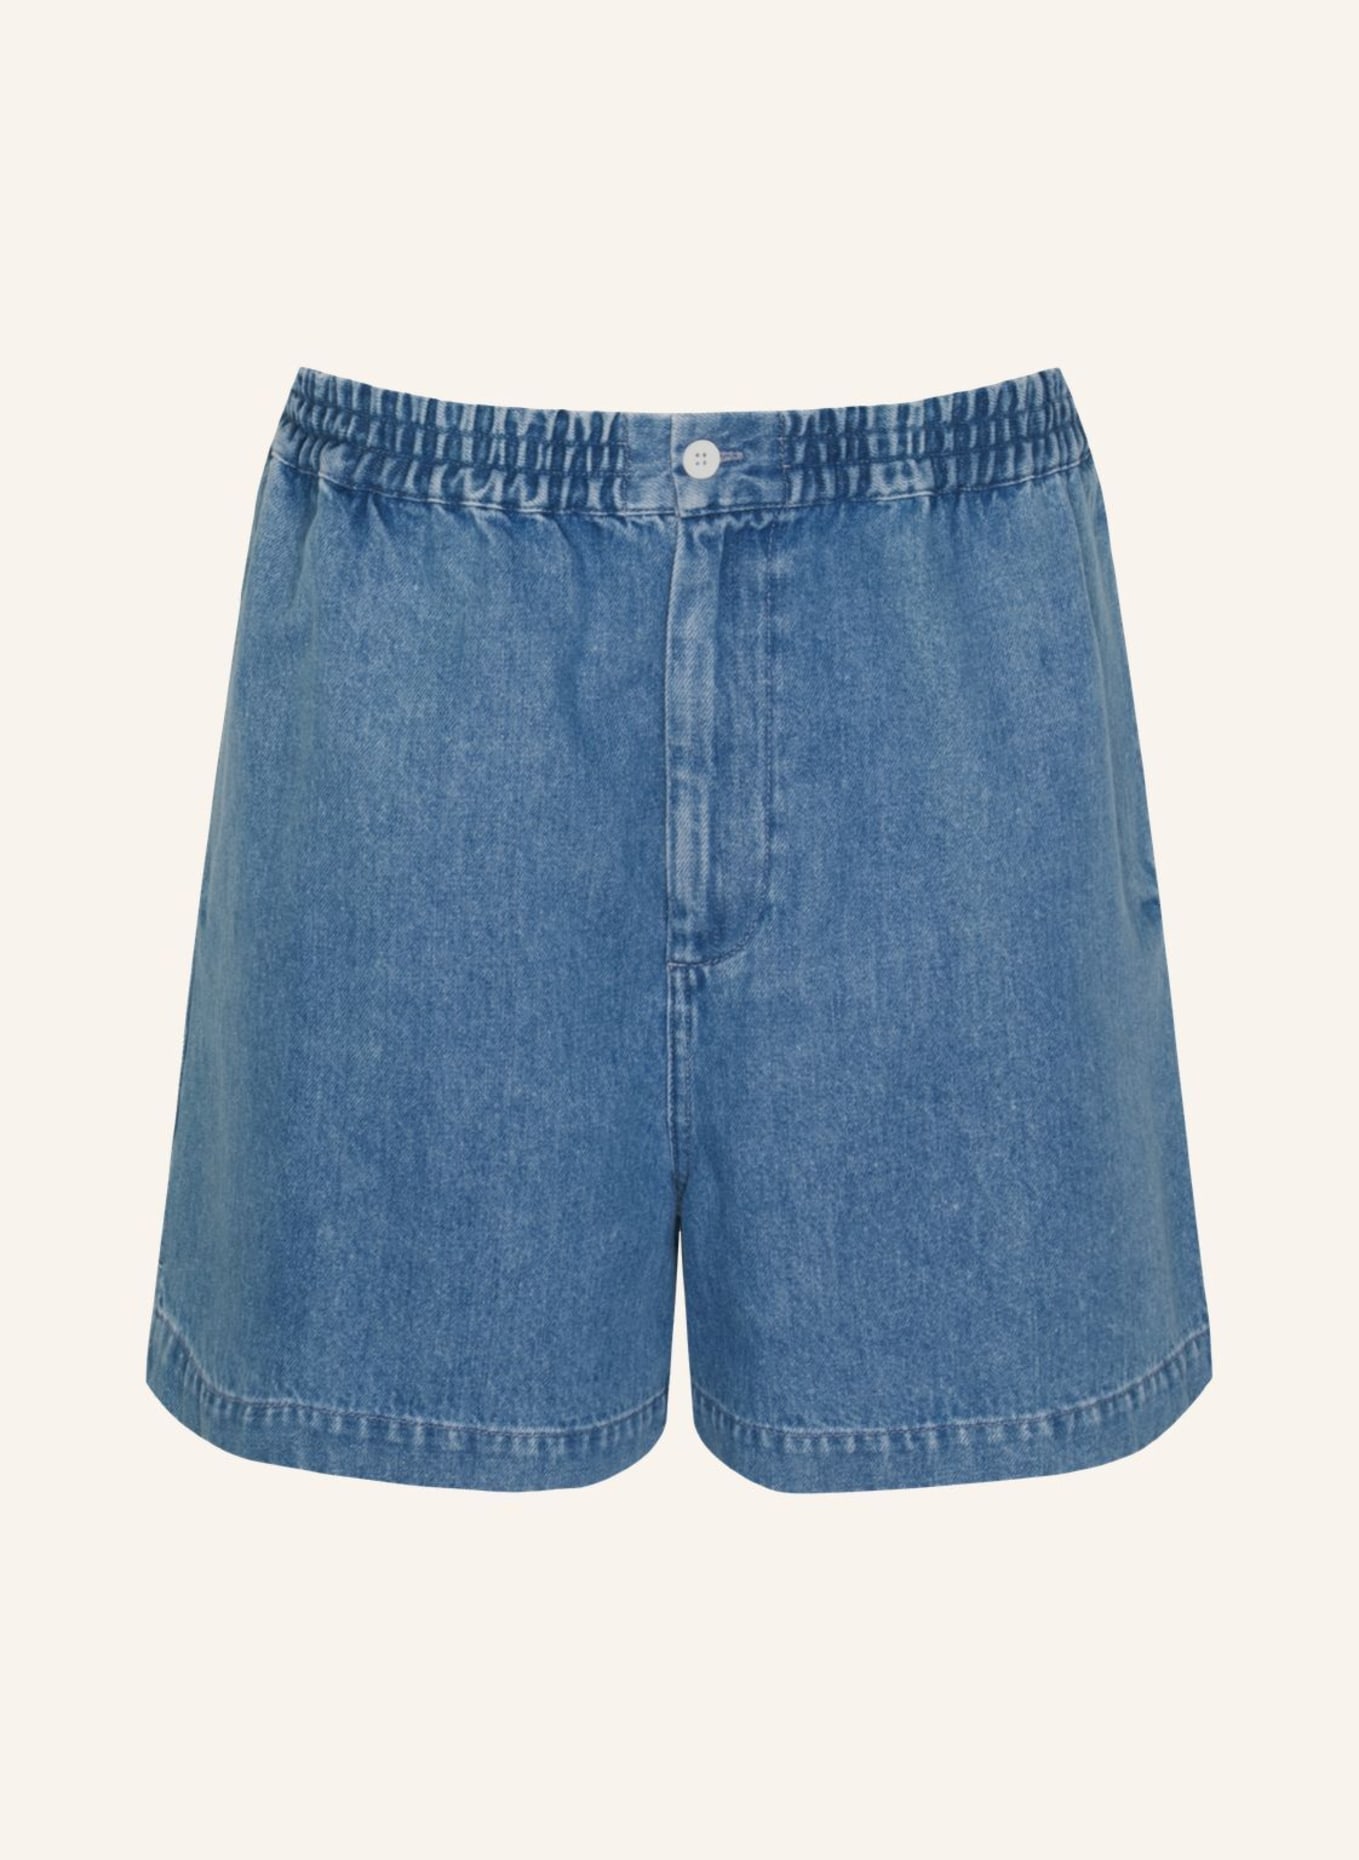 seidensticker Shorts, Chinoshorts Regular Fit, Farbe: BLAU (Bild 1)